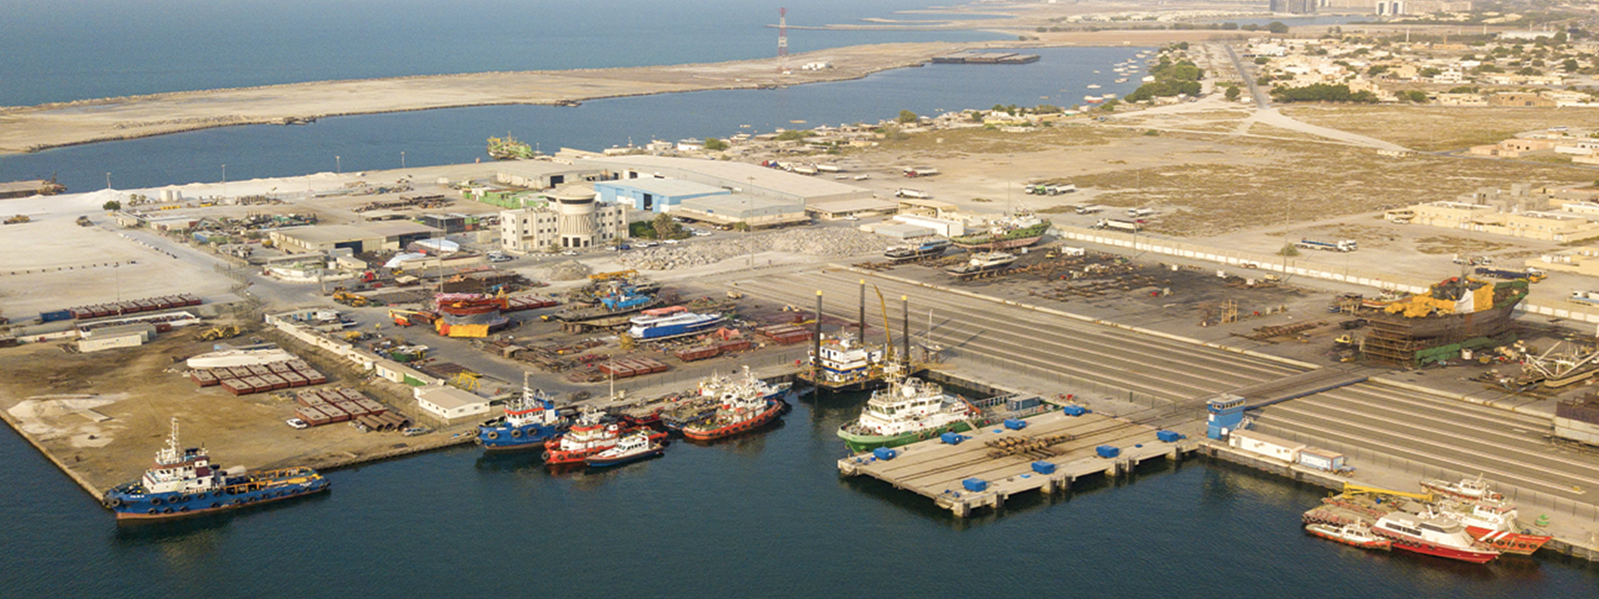 Al Jazeera Port & Shipyard - SHIPYARD